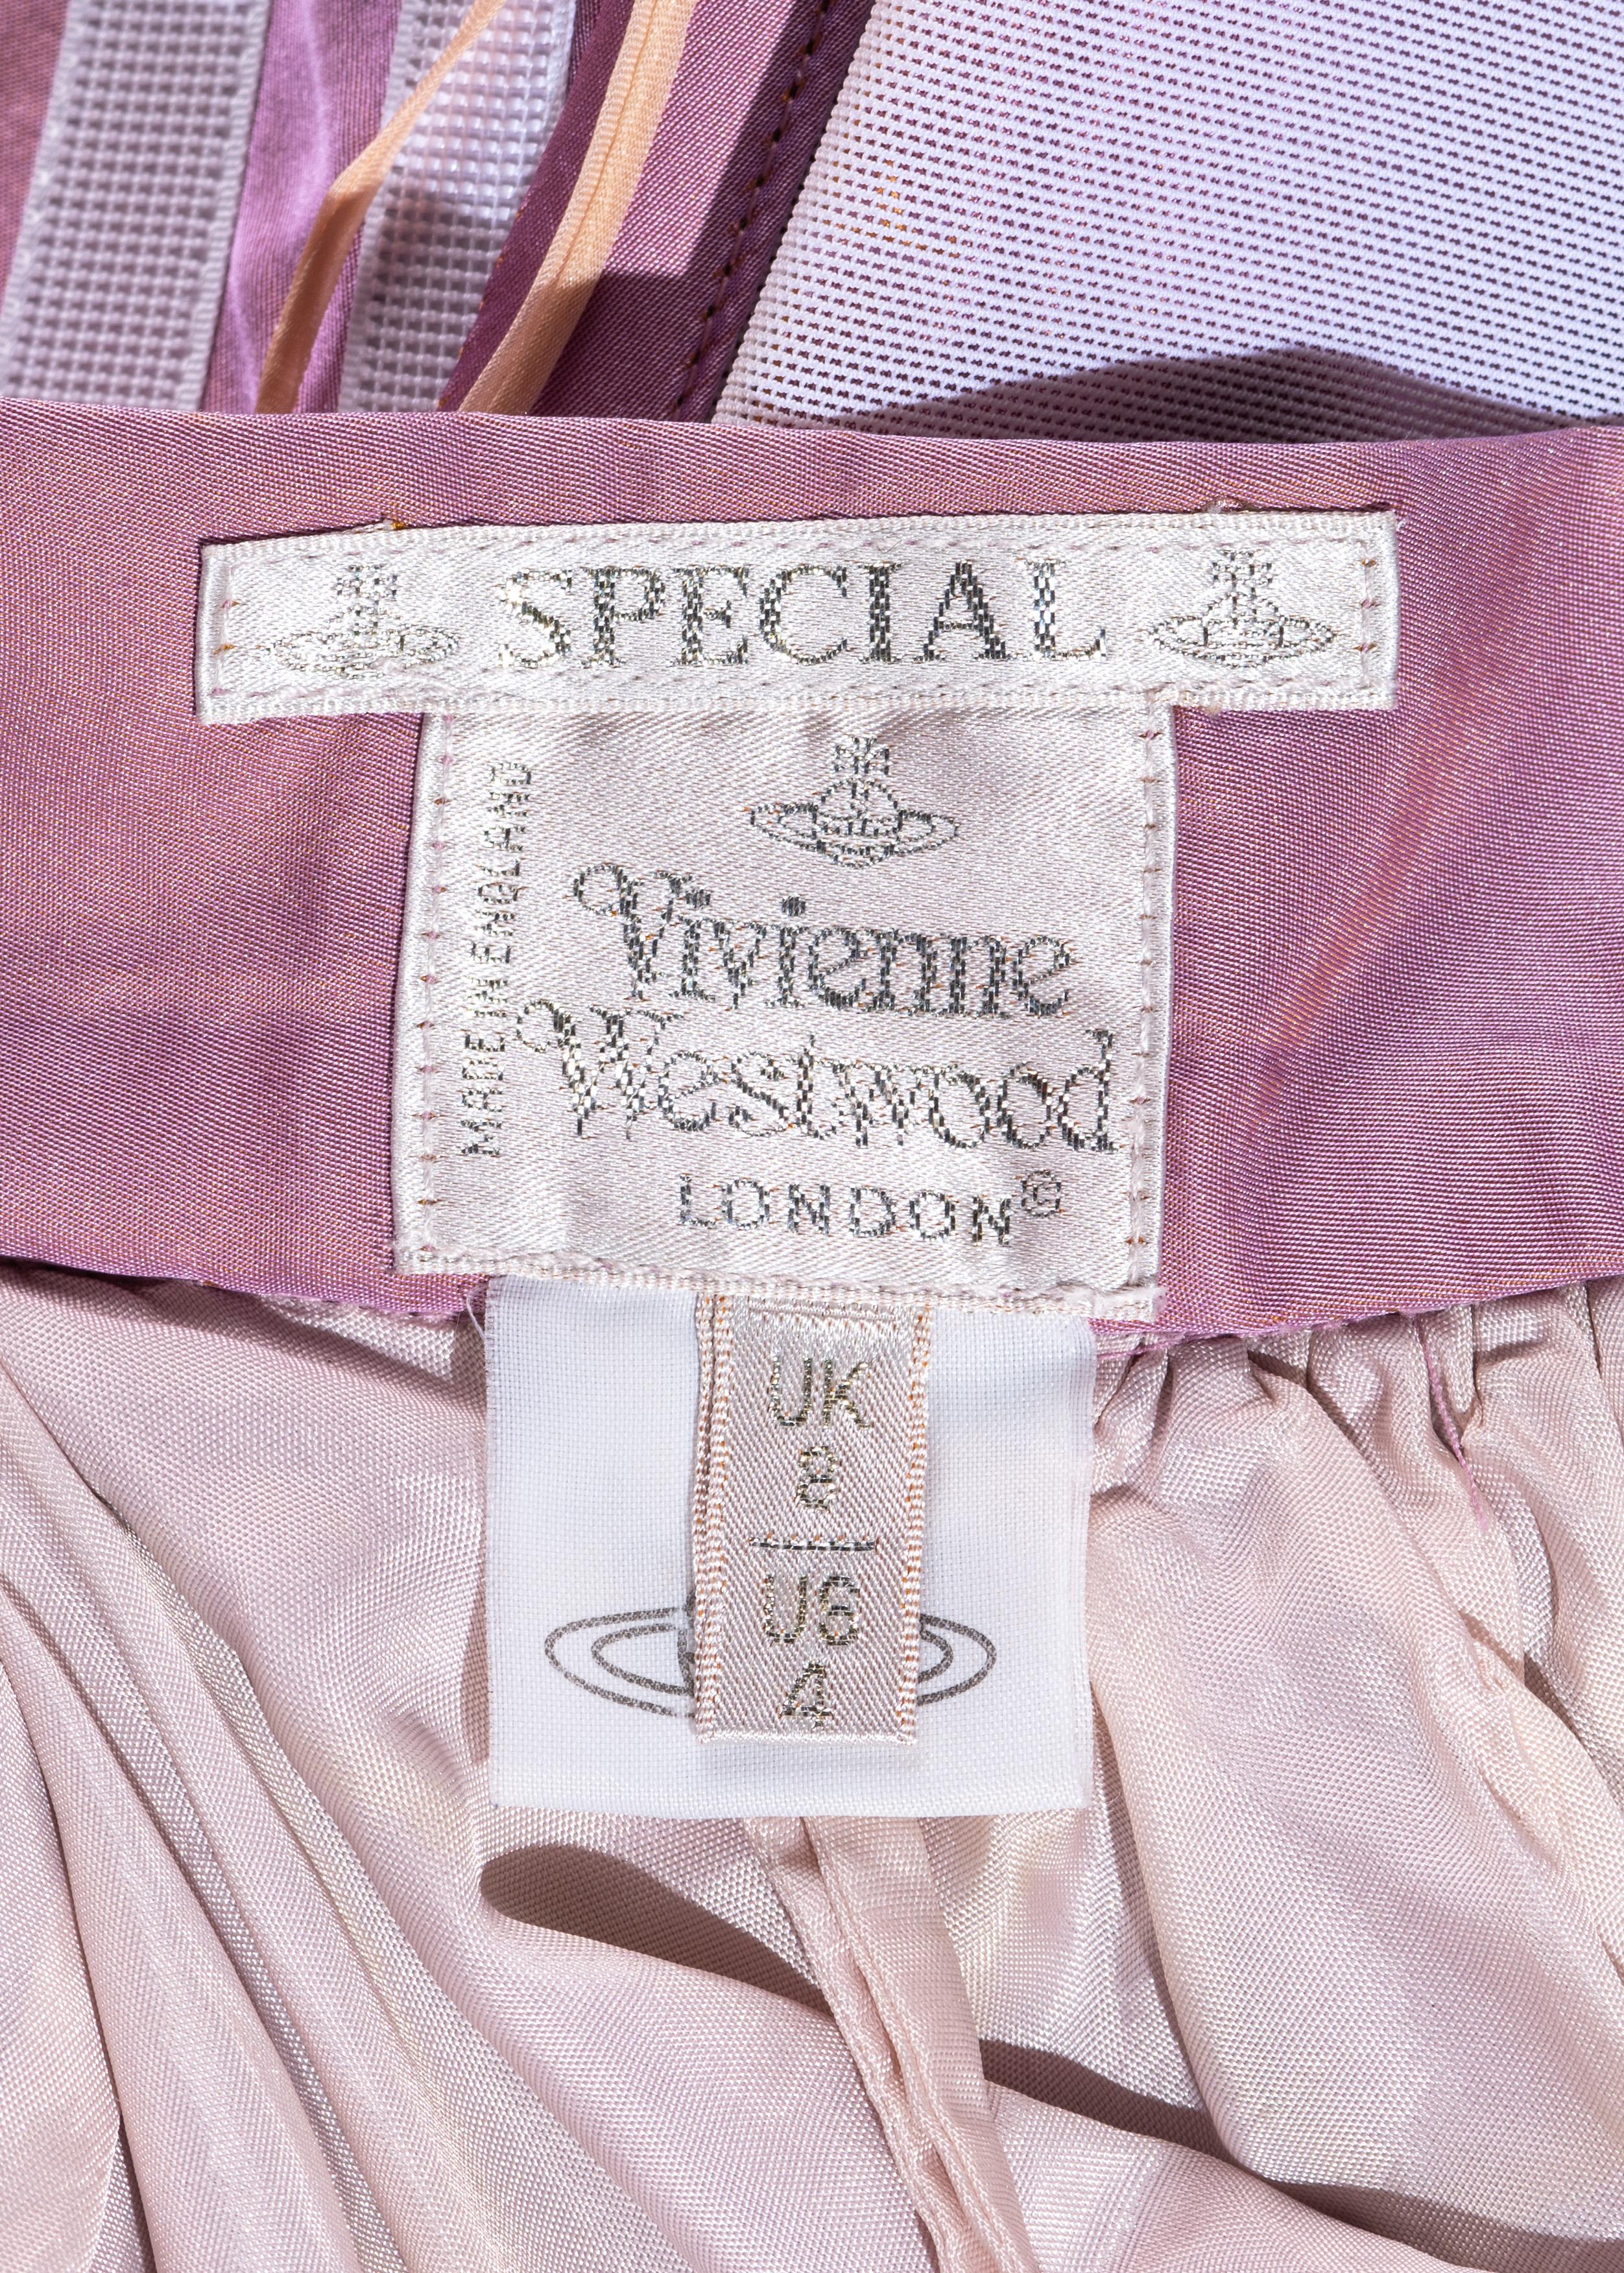 Vivienne Westwood pink silk taffeta corset and bustled maxi skirt, fw 1996 1